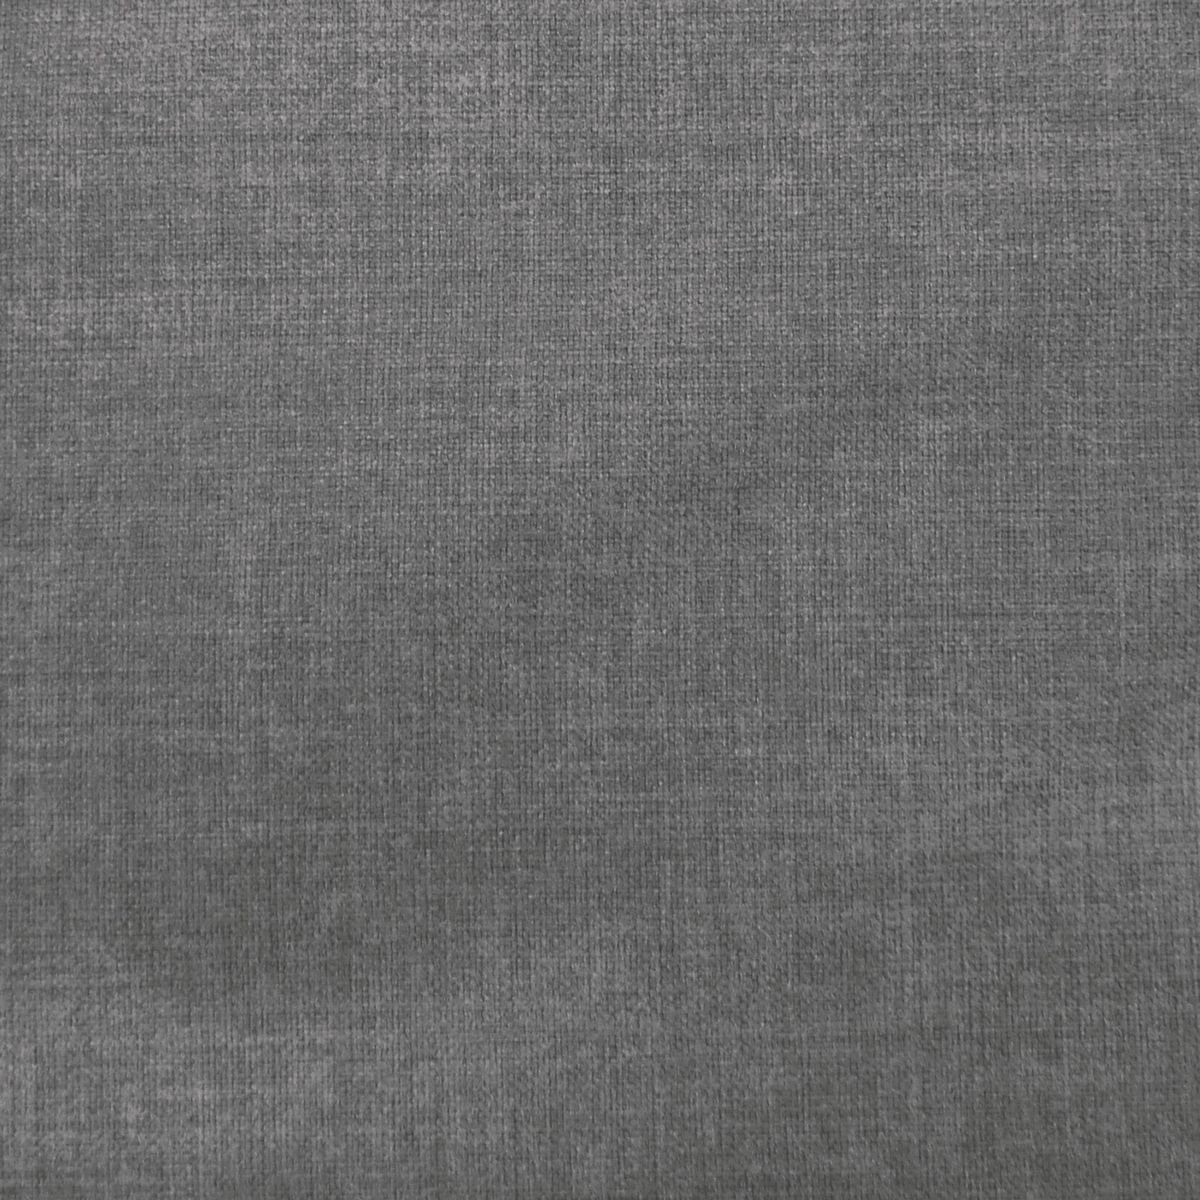 Molise Charcoal Fabric by Voyage Maison